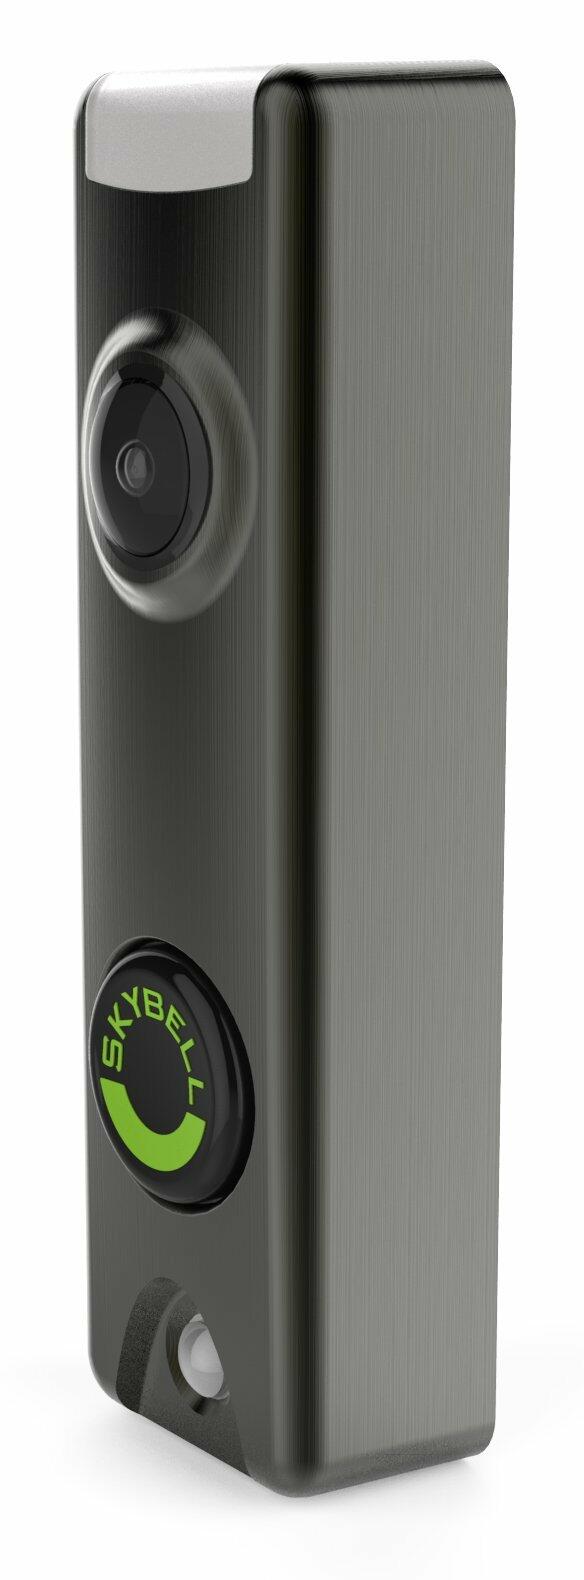 Honeywell SkyBell Slim Design 1080p Wi-Fi Video Doorbell Bronze Finish  - Like New